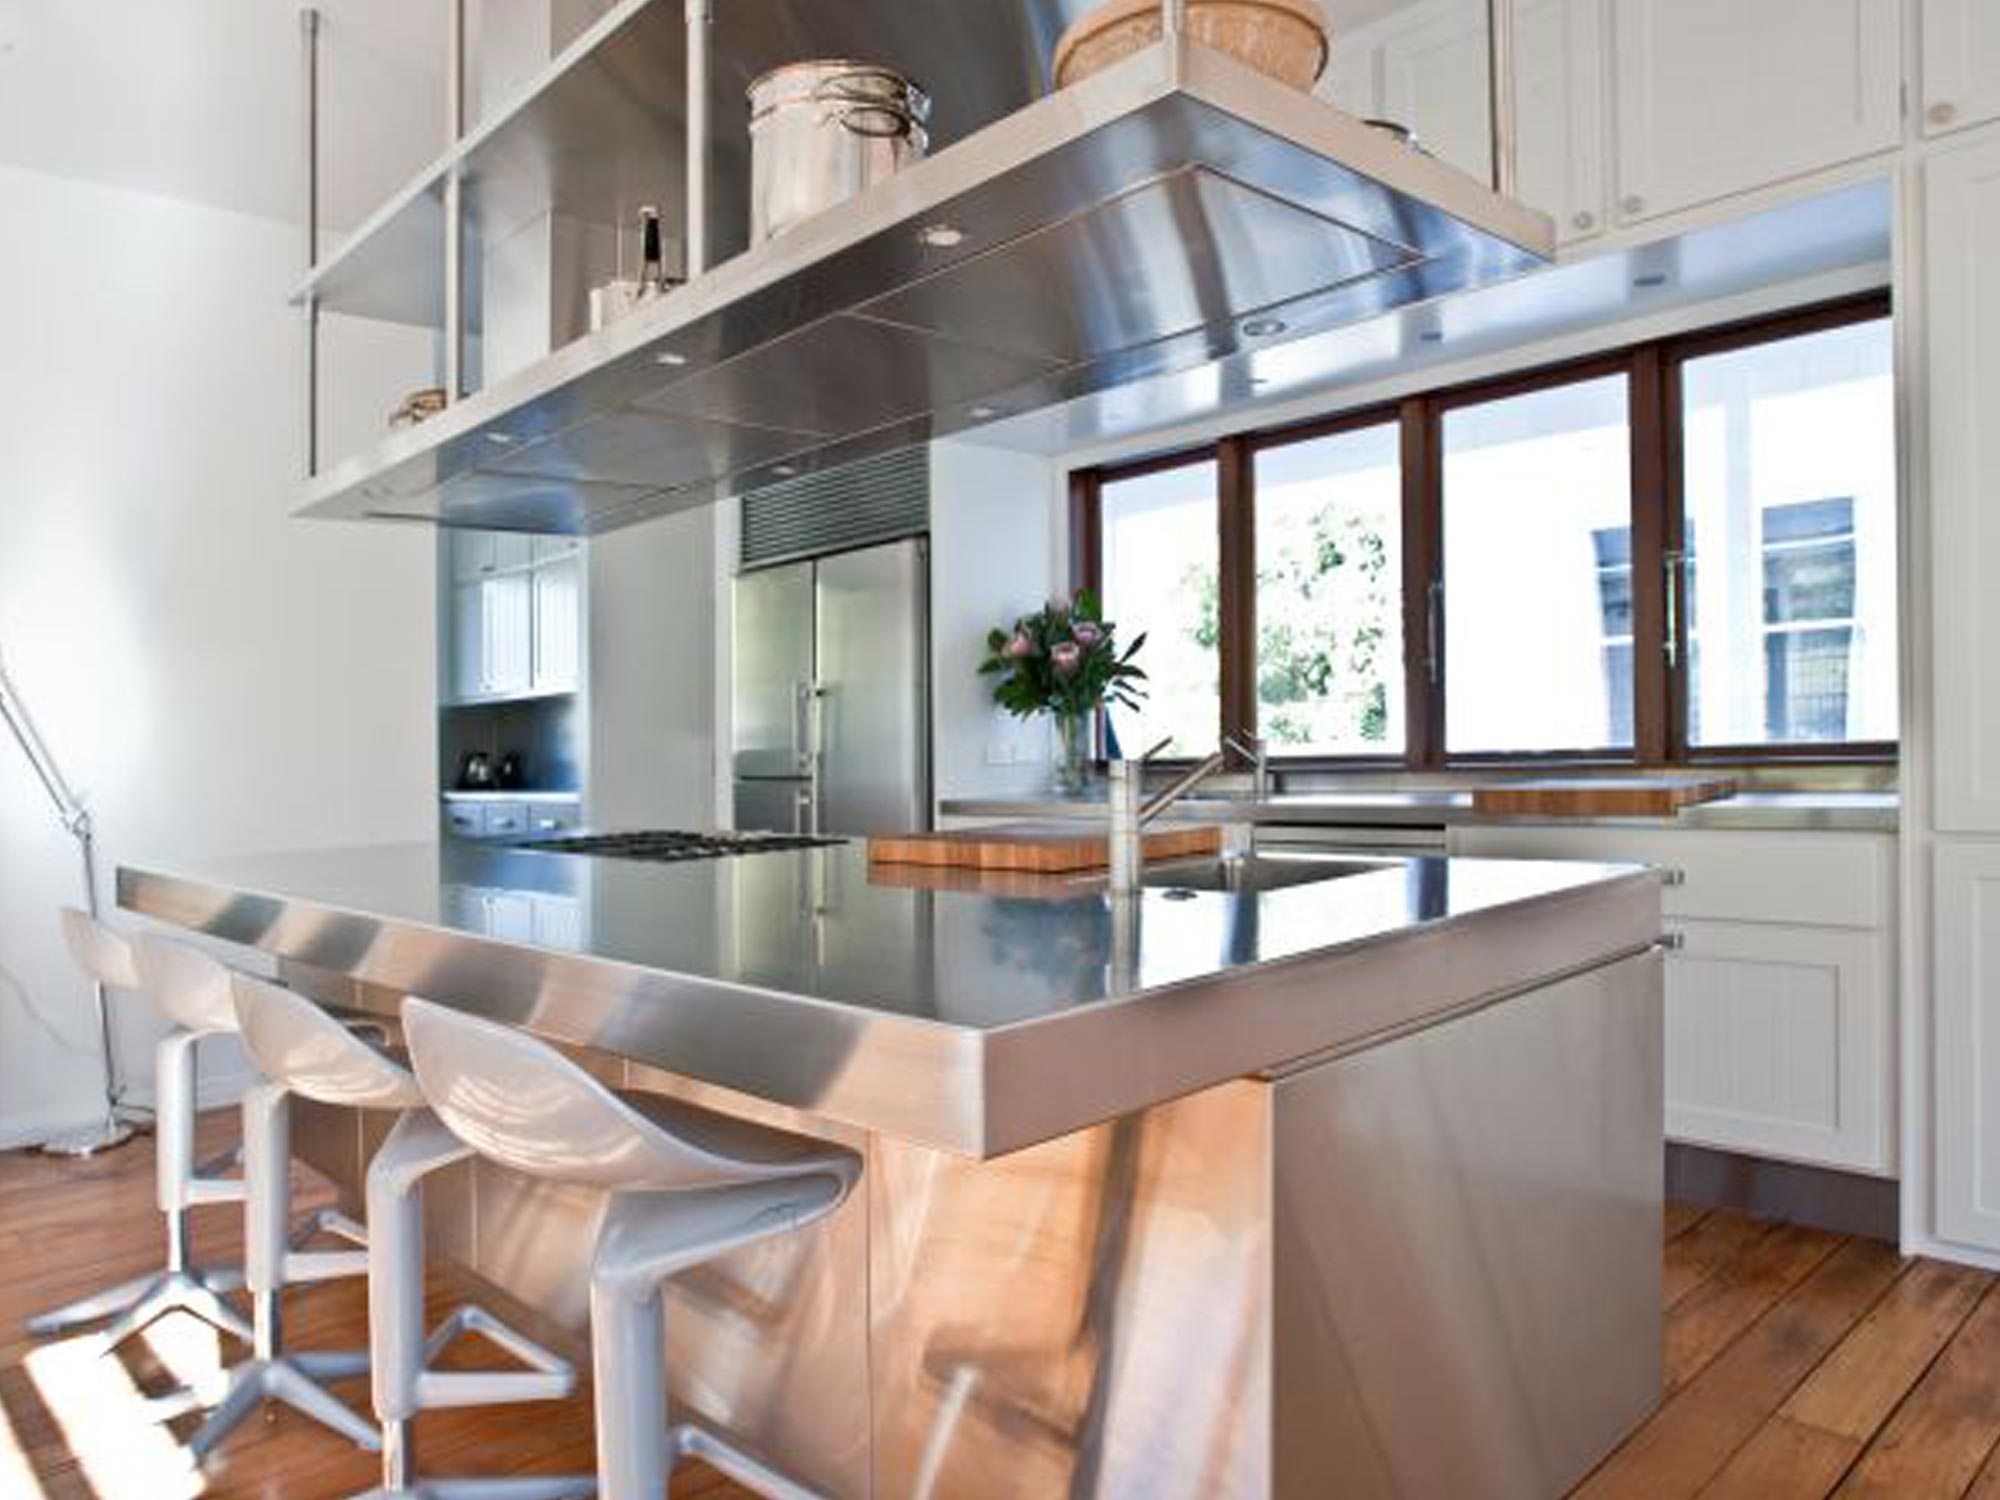 architectural range hoods domestic above kitchen island